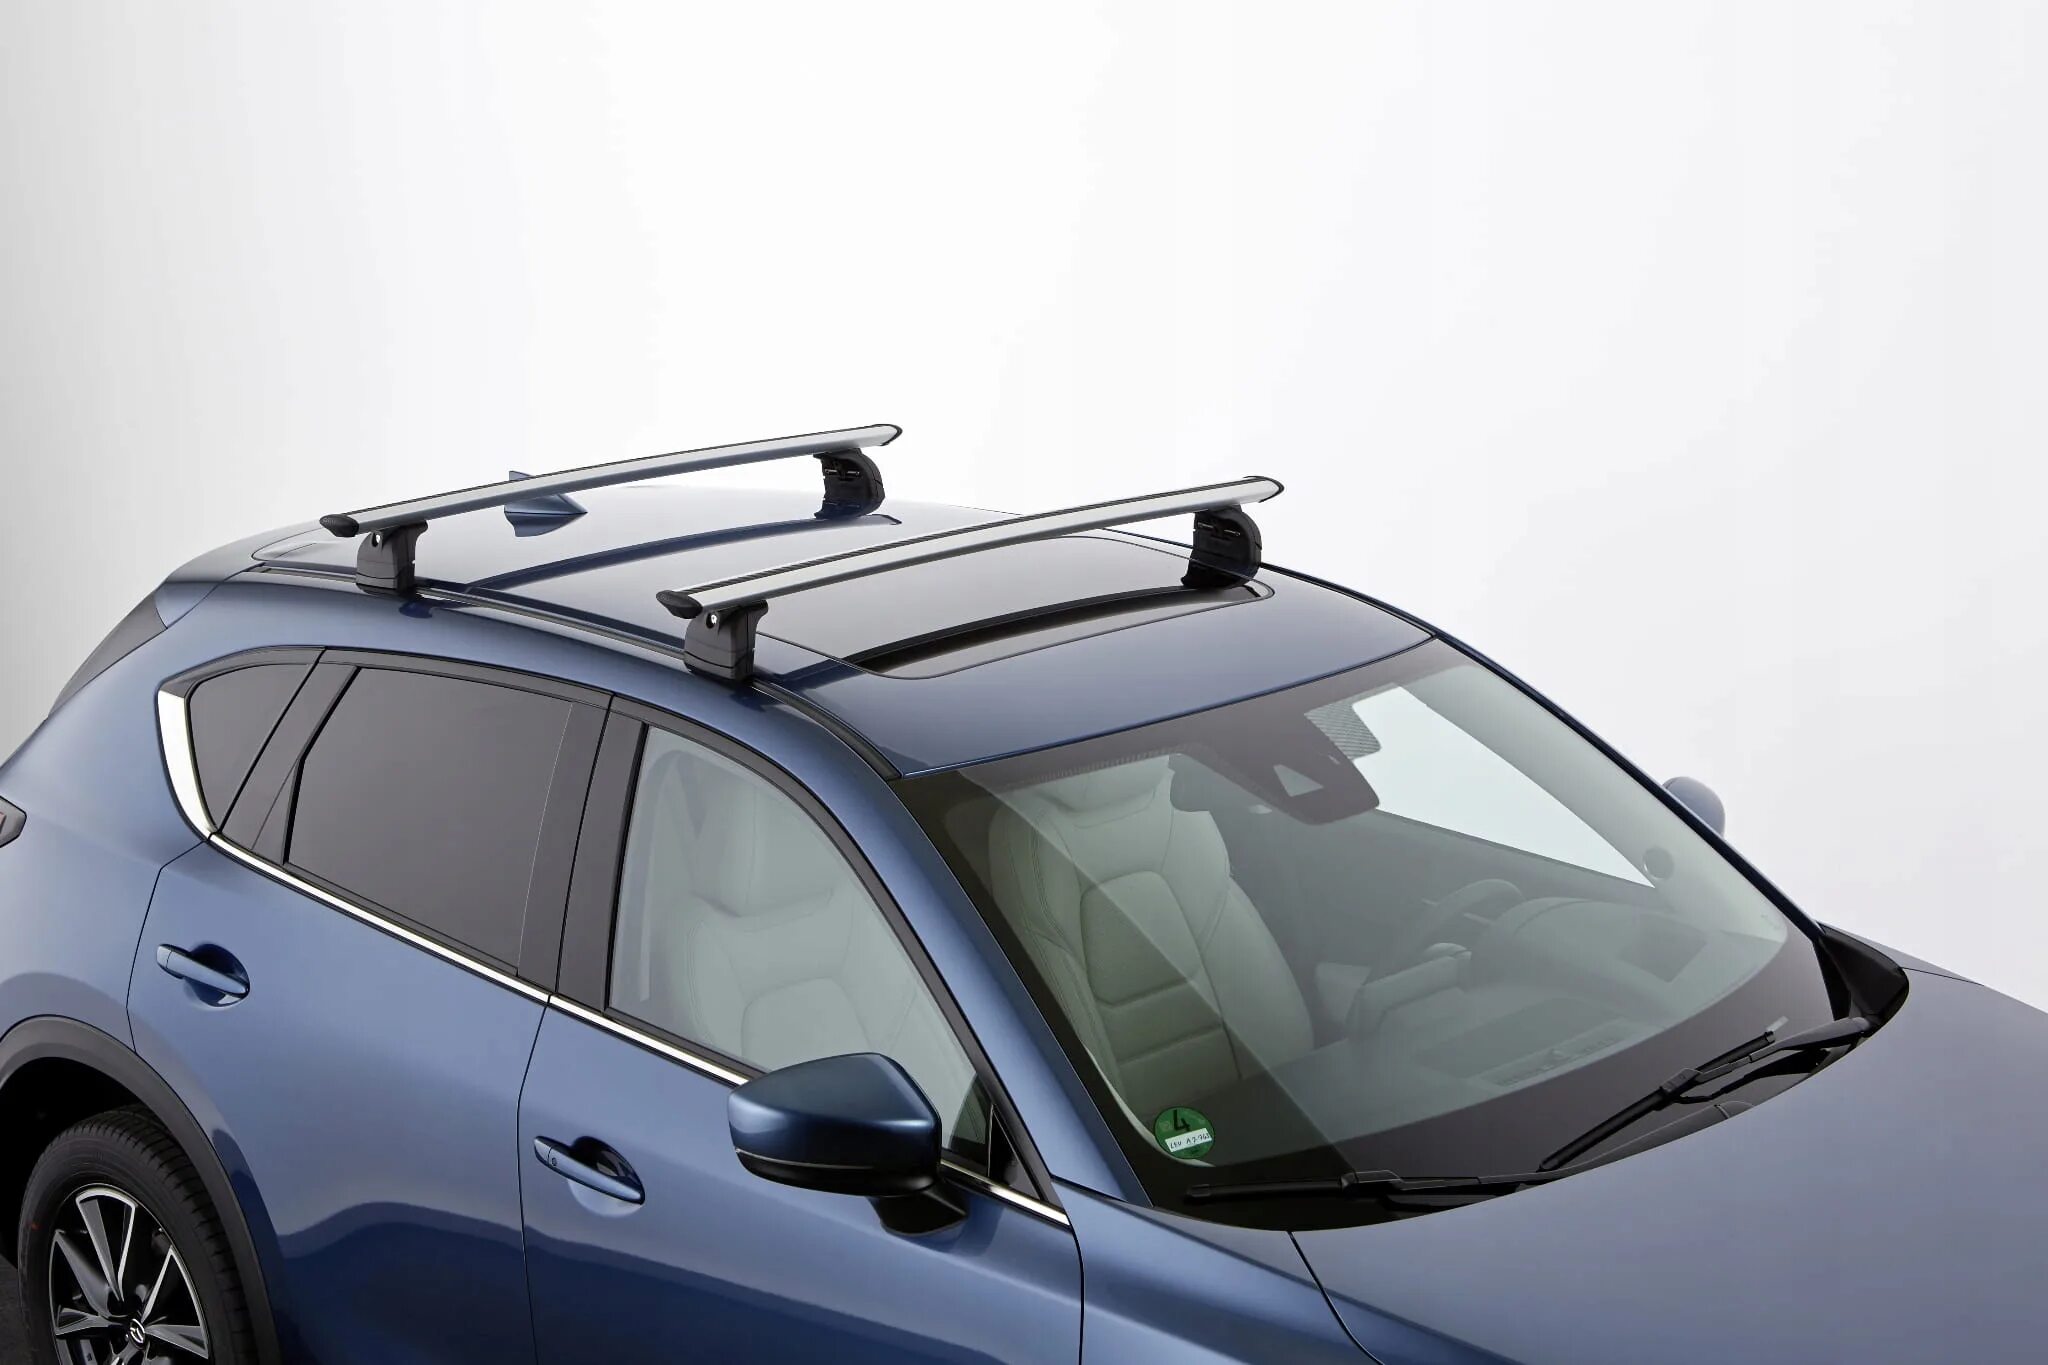 Рейлинги сх 5. Багажные поперечины для Mazda CX-5 2017. Багажник на крышу Мазда СХ-5. Mazda CX 5 поперечины. Багажник на крышу Mazda CX-5 Thule.